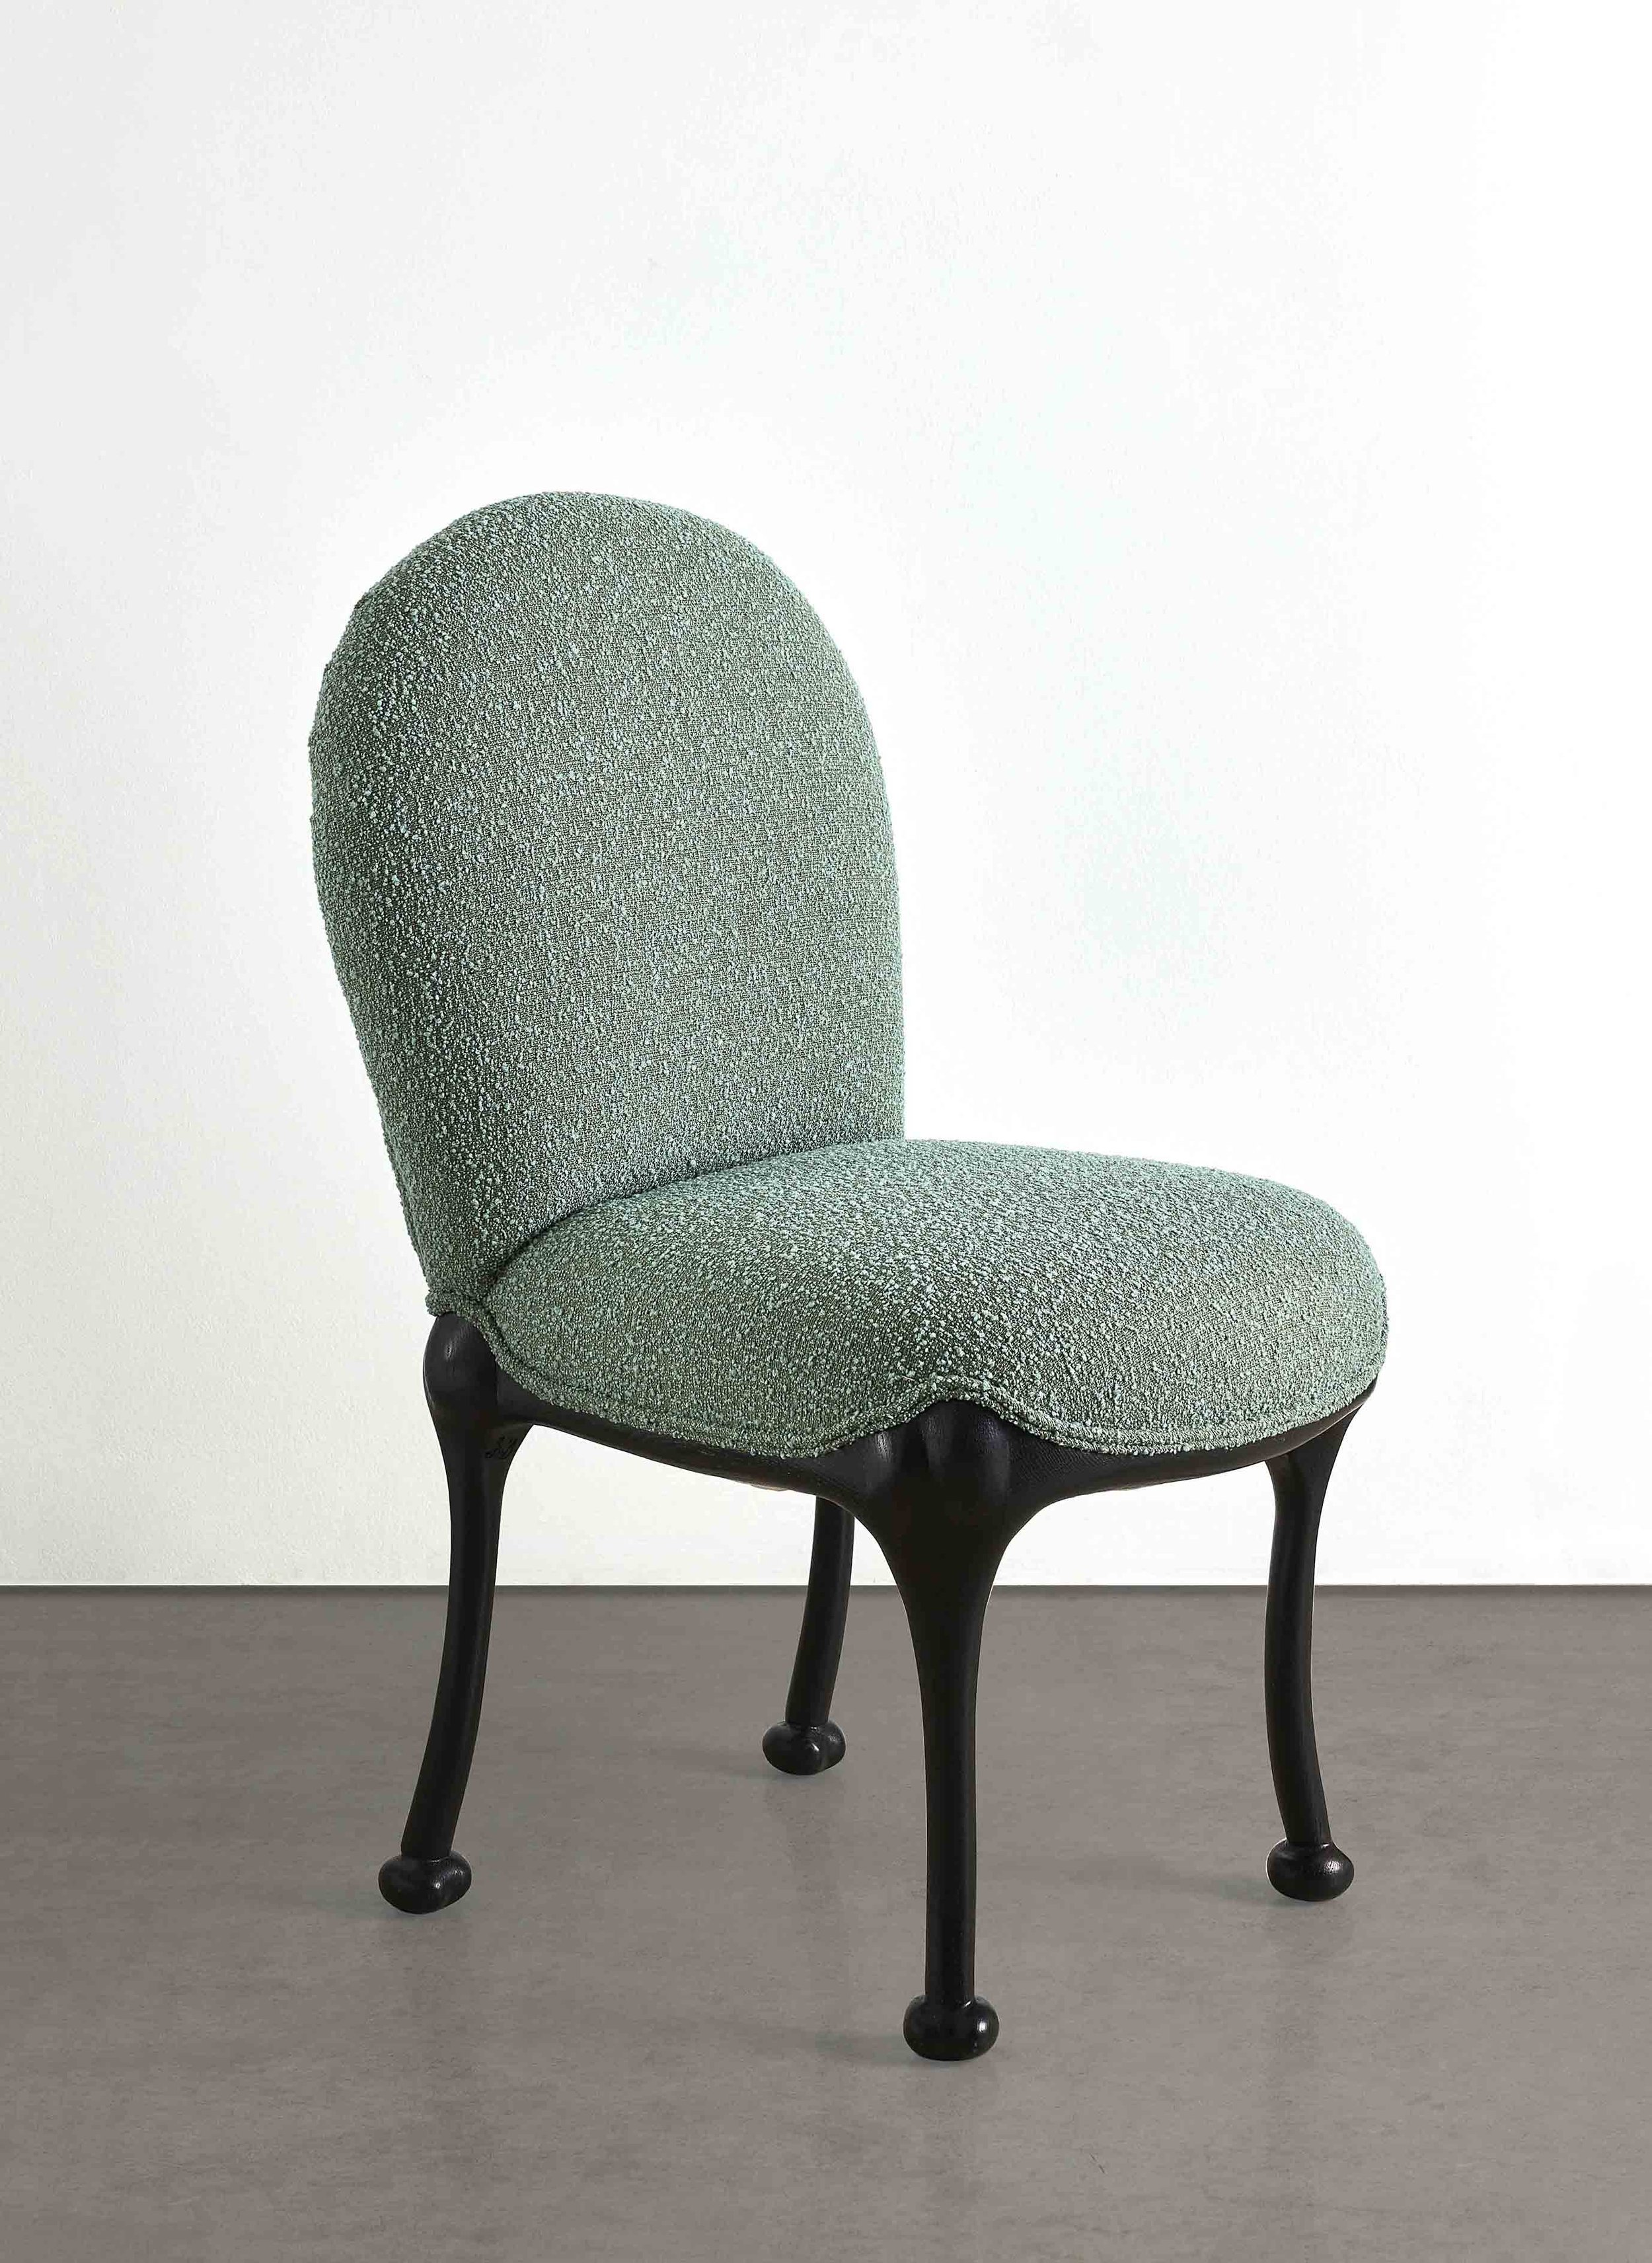 1.MB Chair 'Buttocks'.jpg